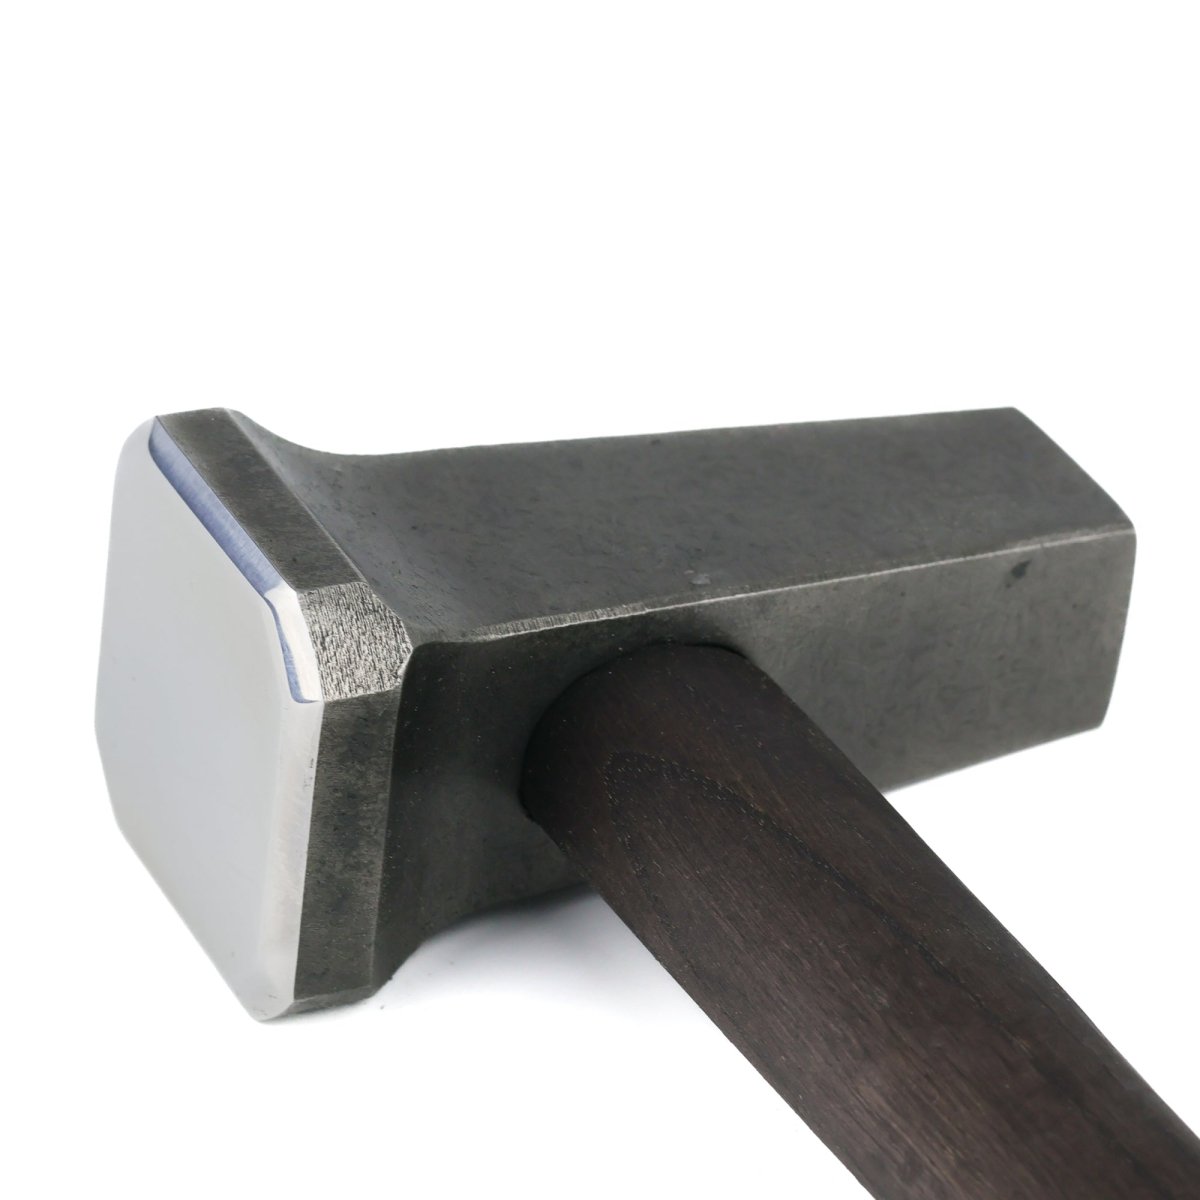 Blacksmith Flatter Hammer 2.5 lbs from AncientSmithy